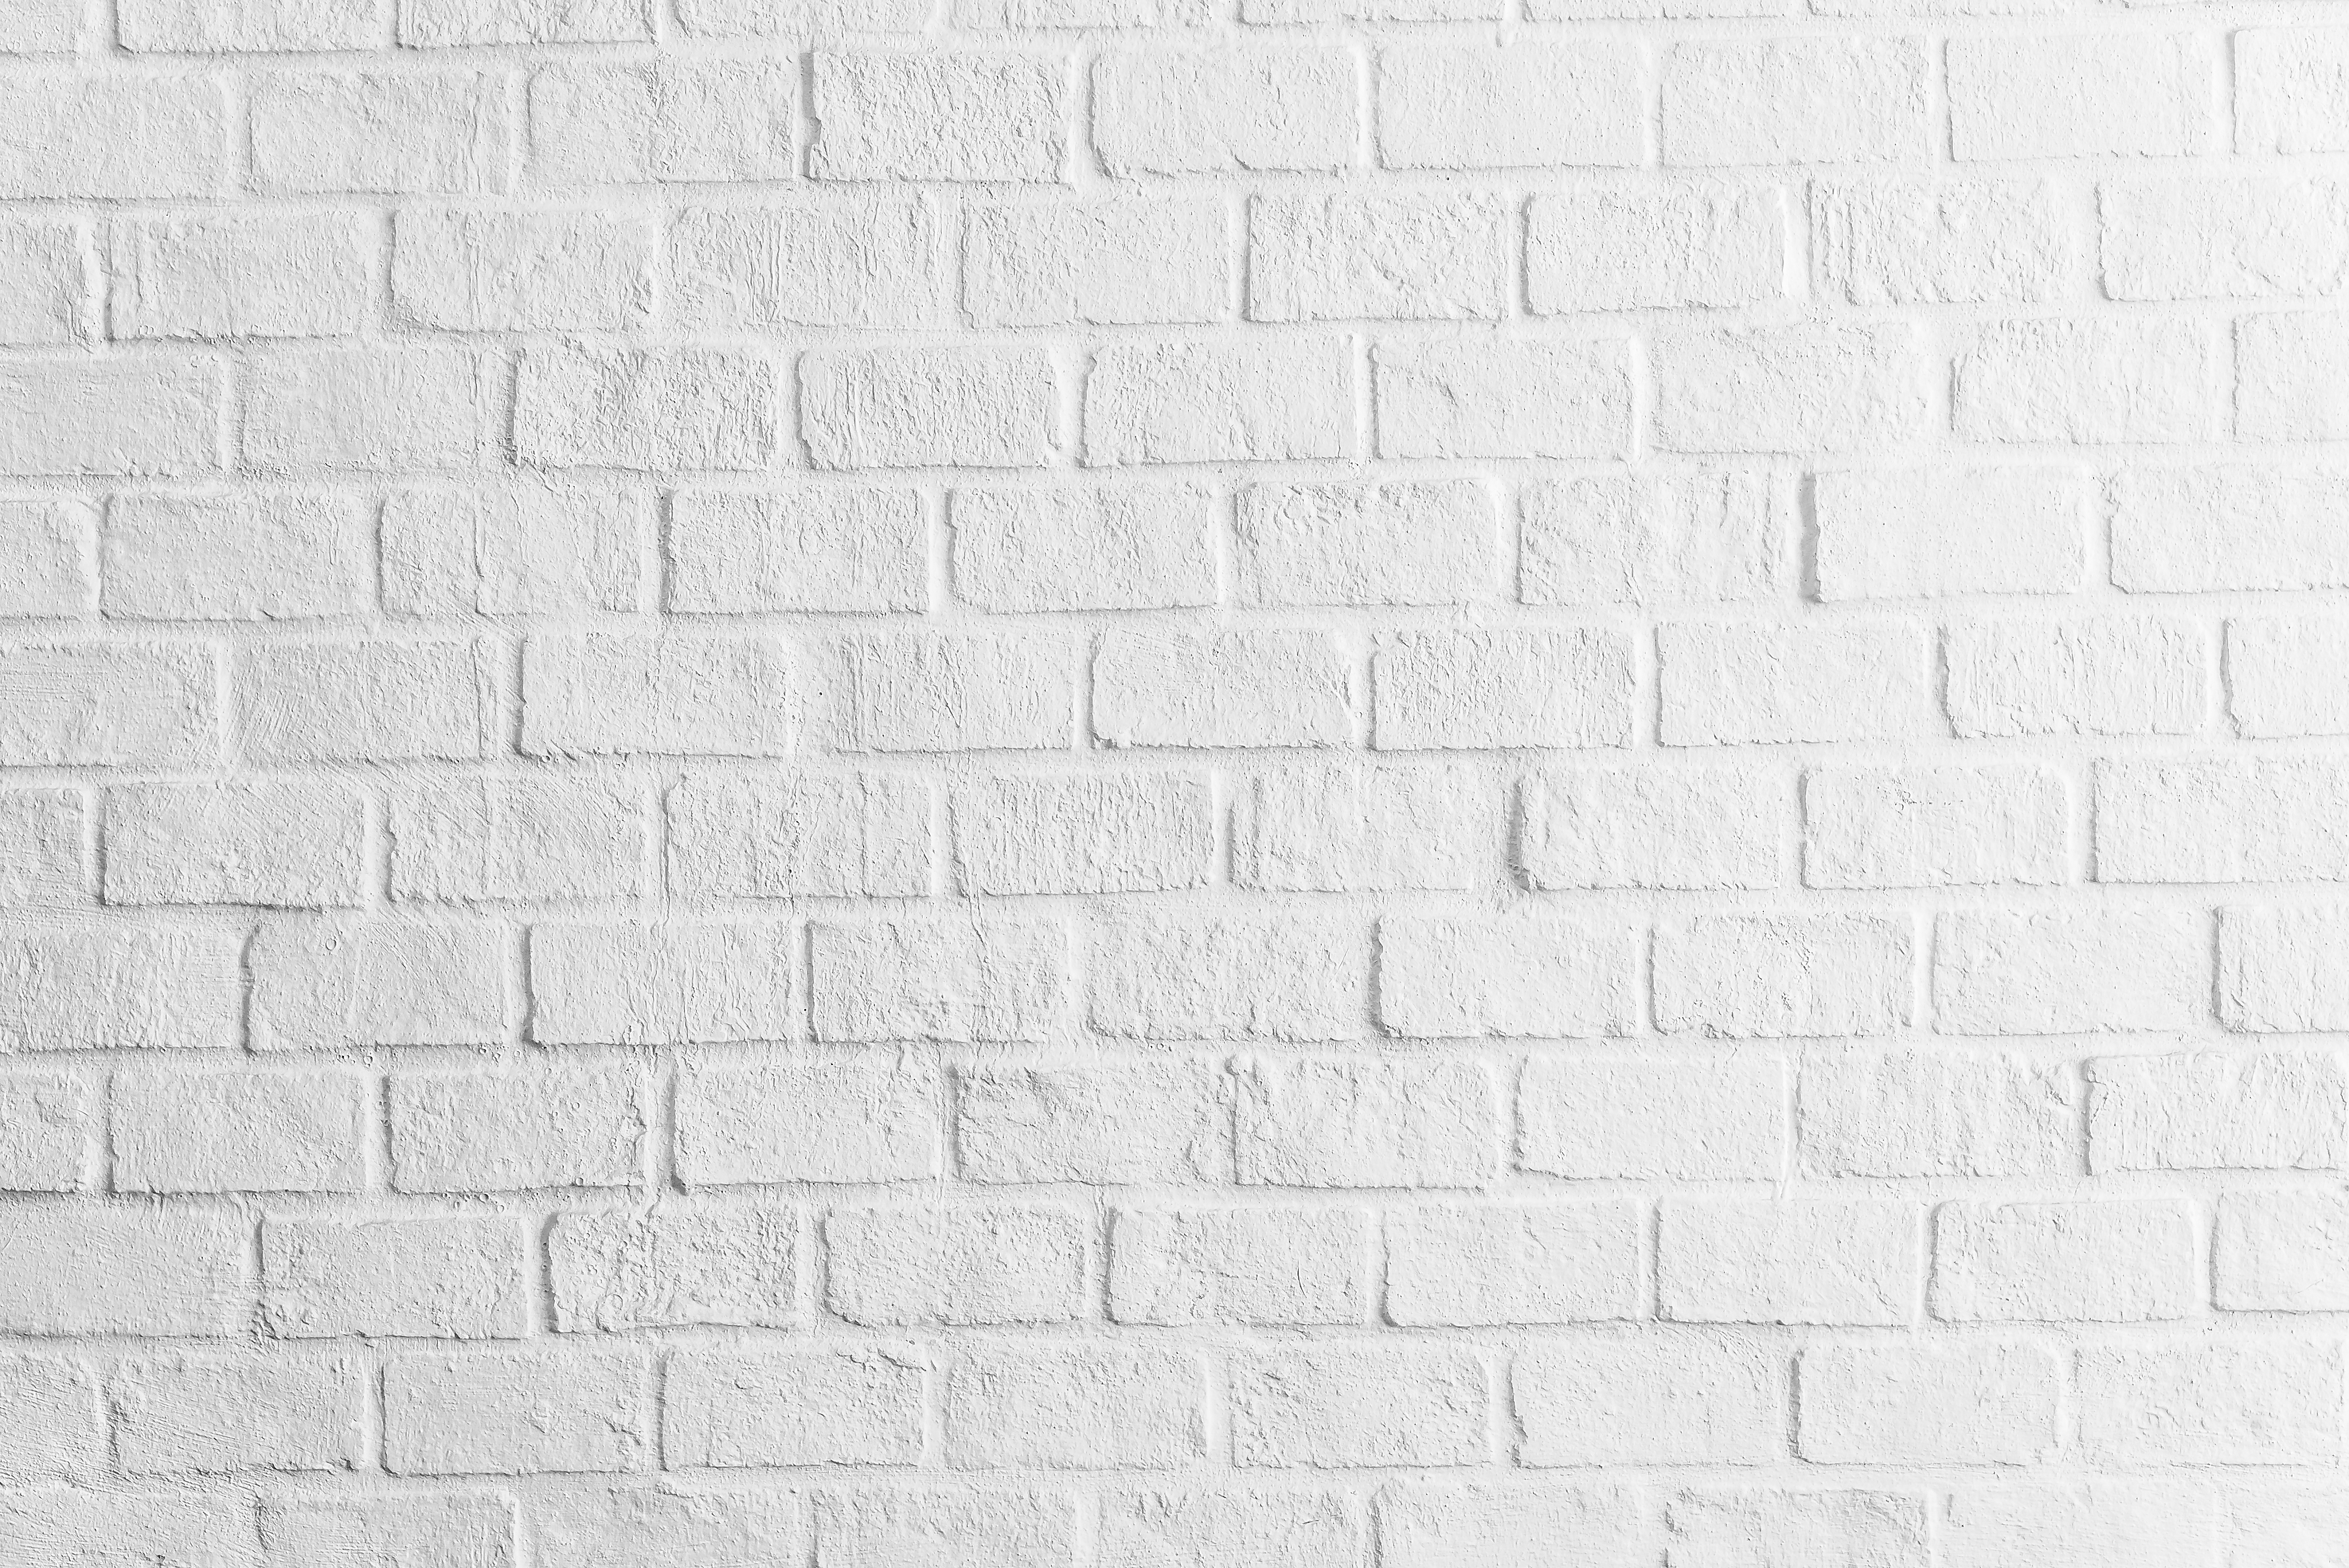 block wallpaper,brickwork,wall,brick,stone wall